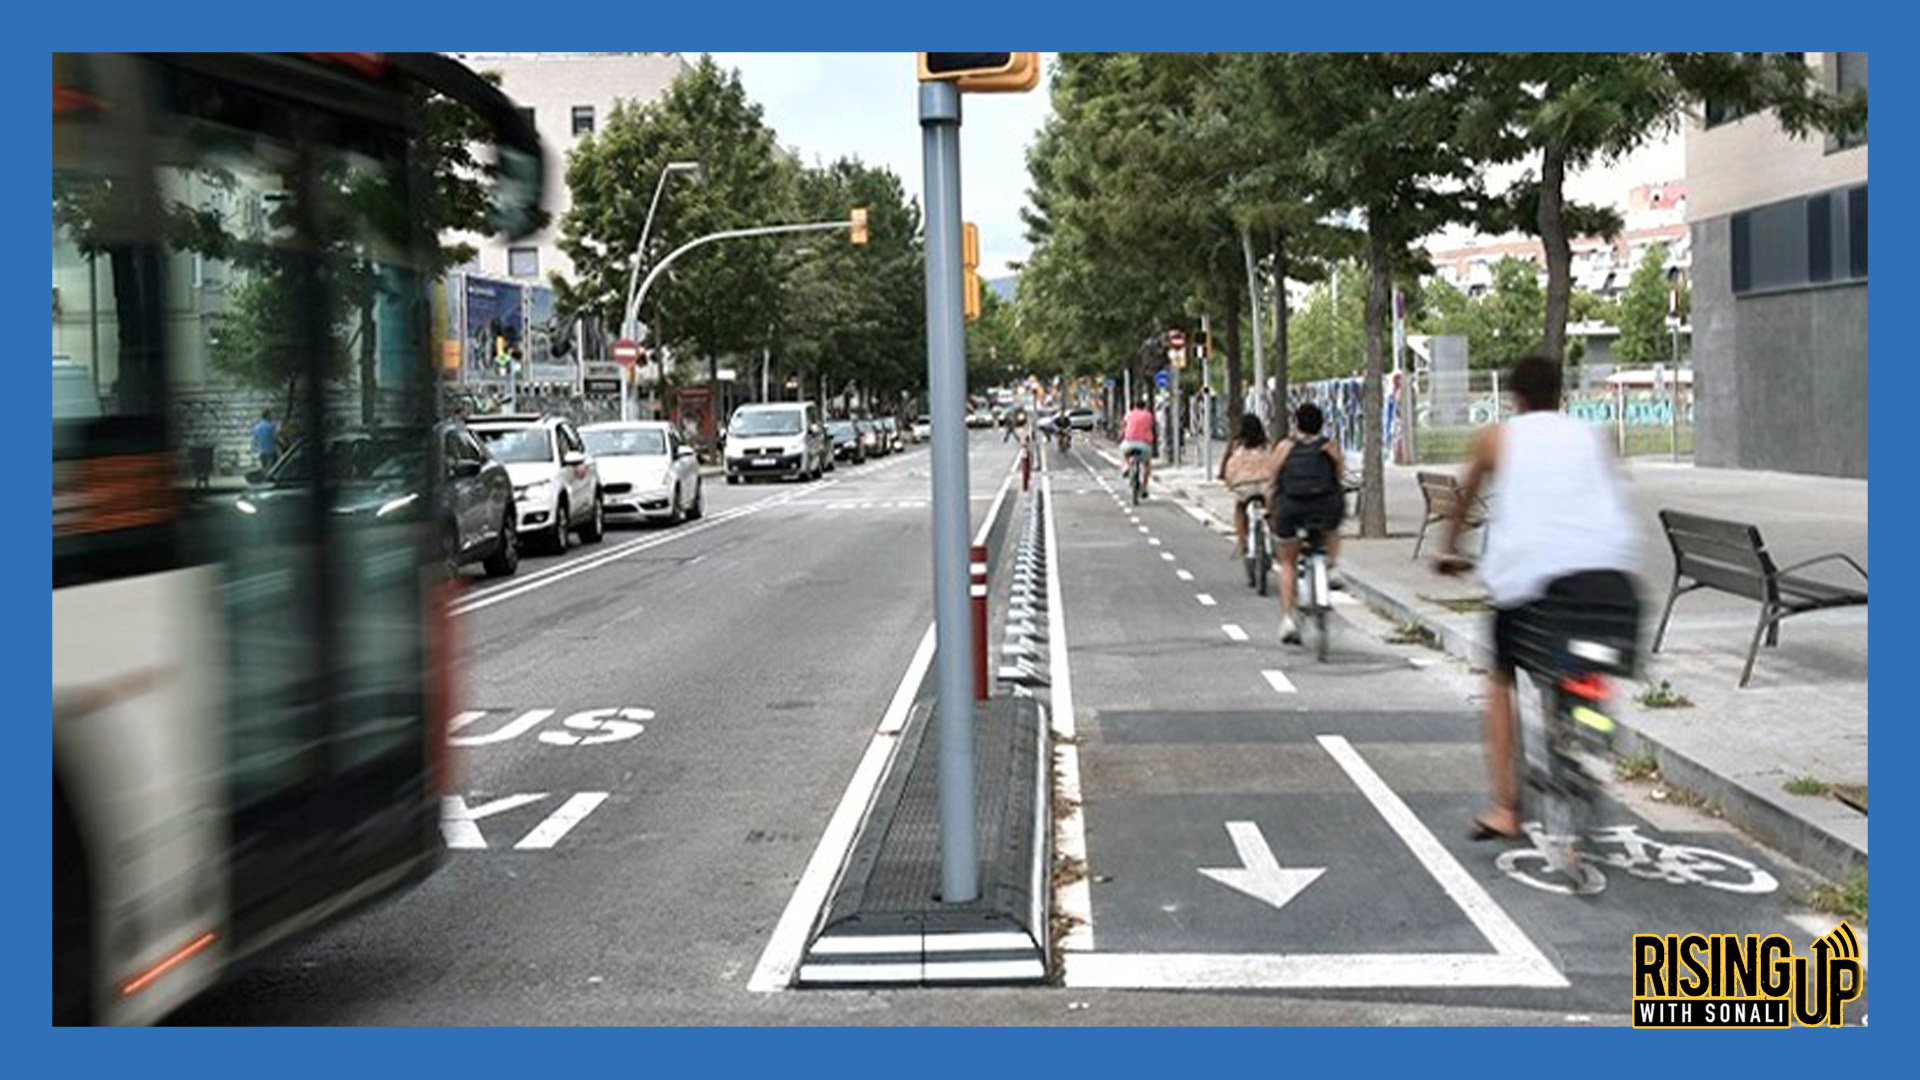 How Do We Make City Safer Streets?